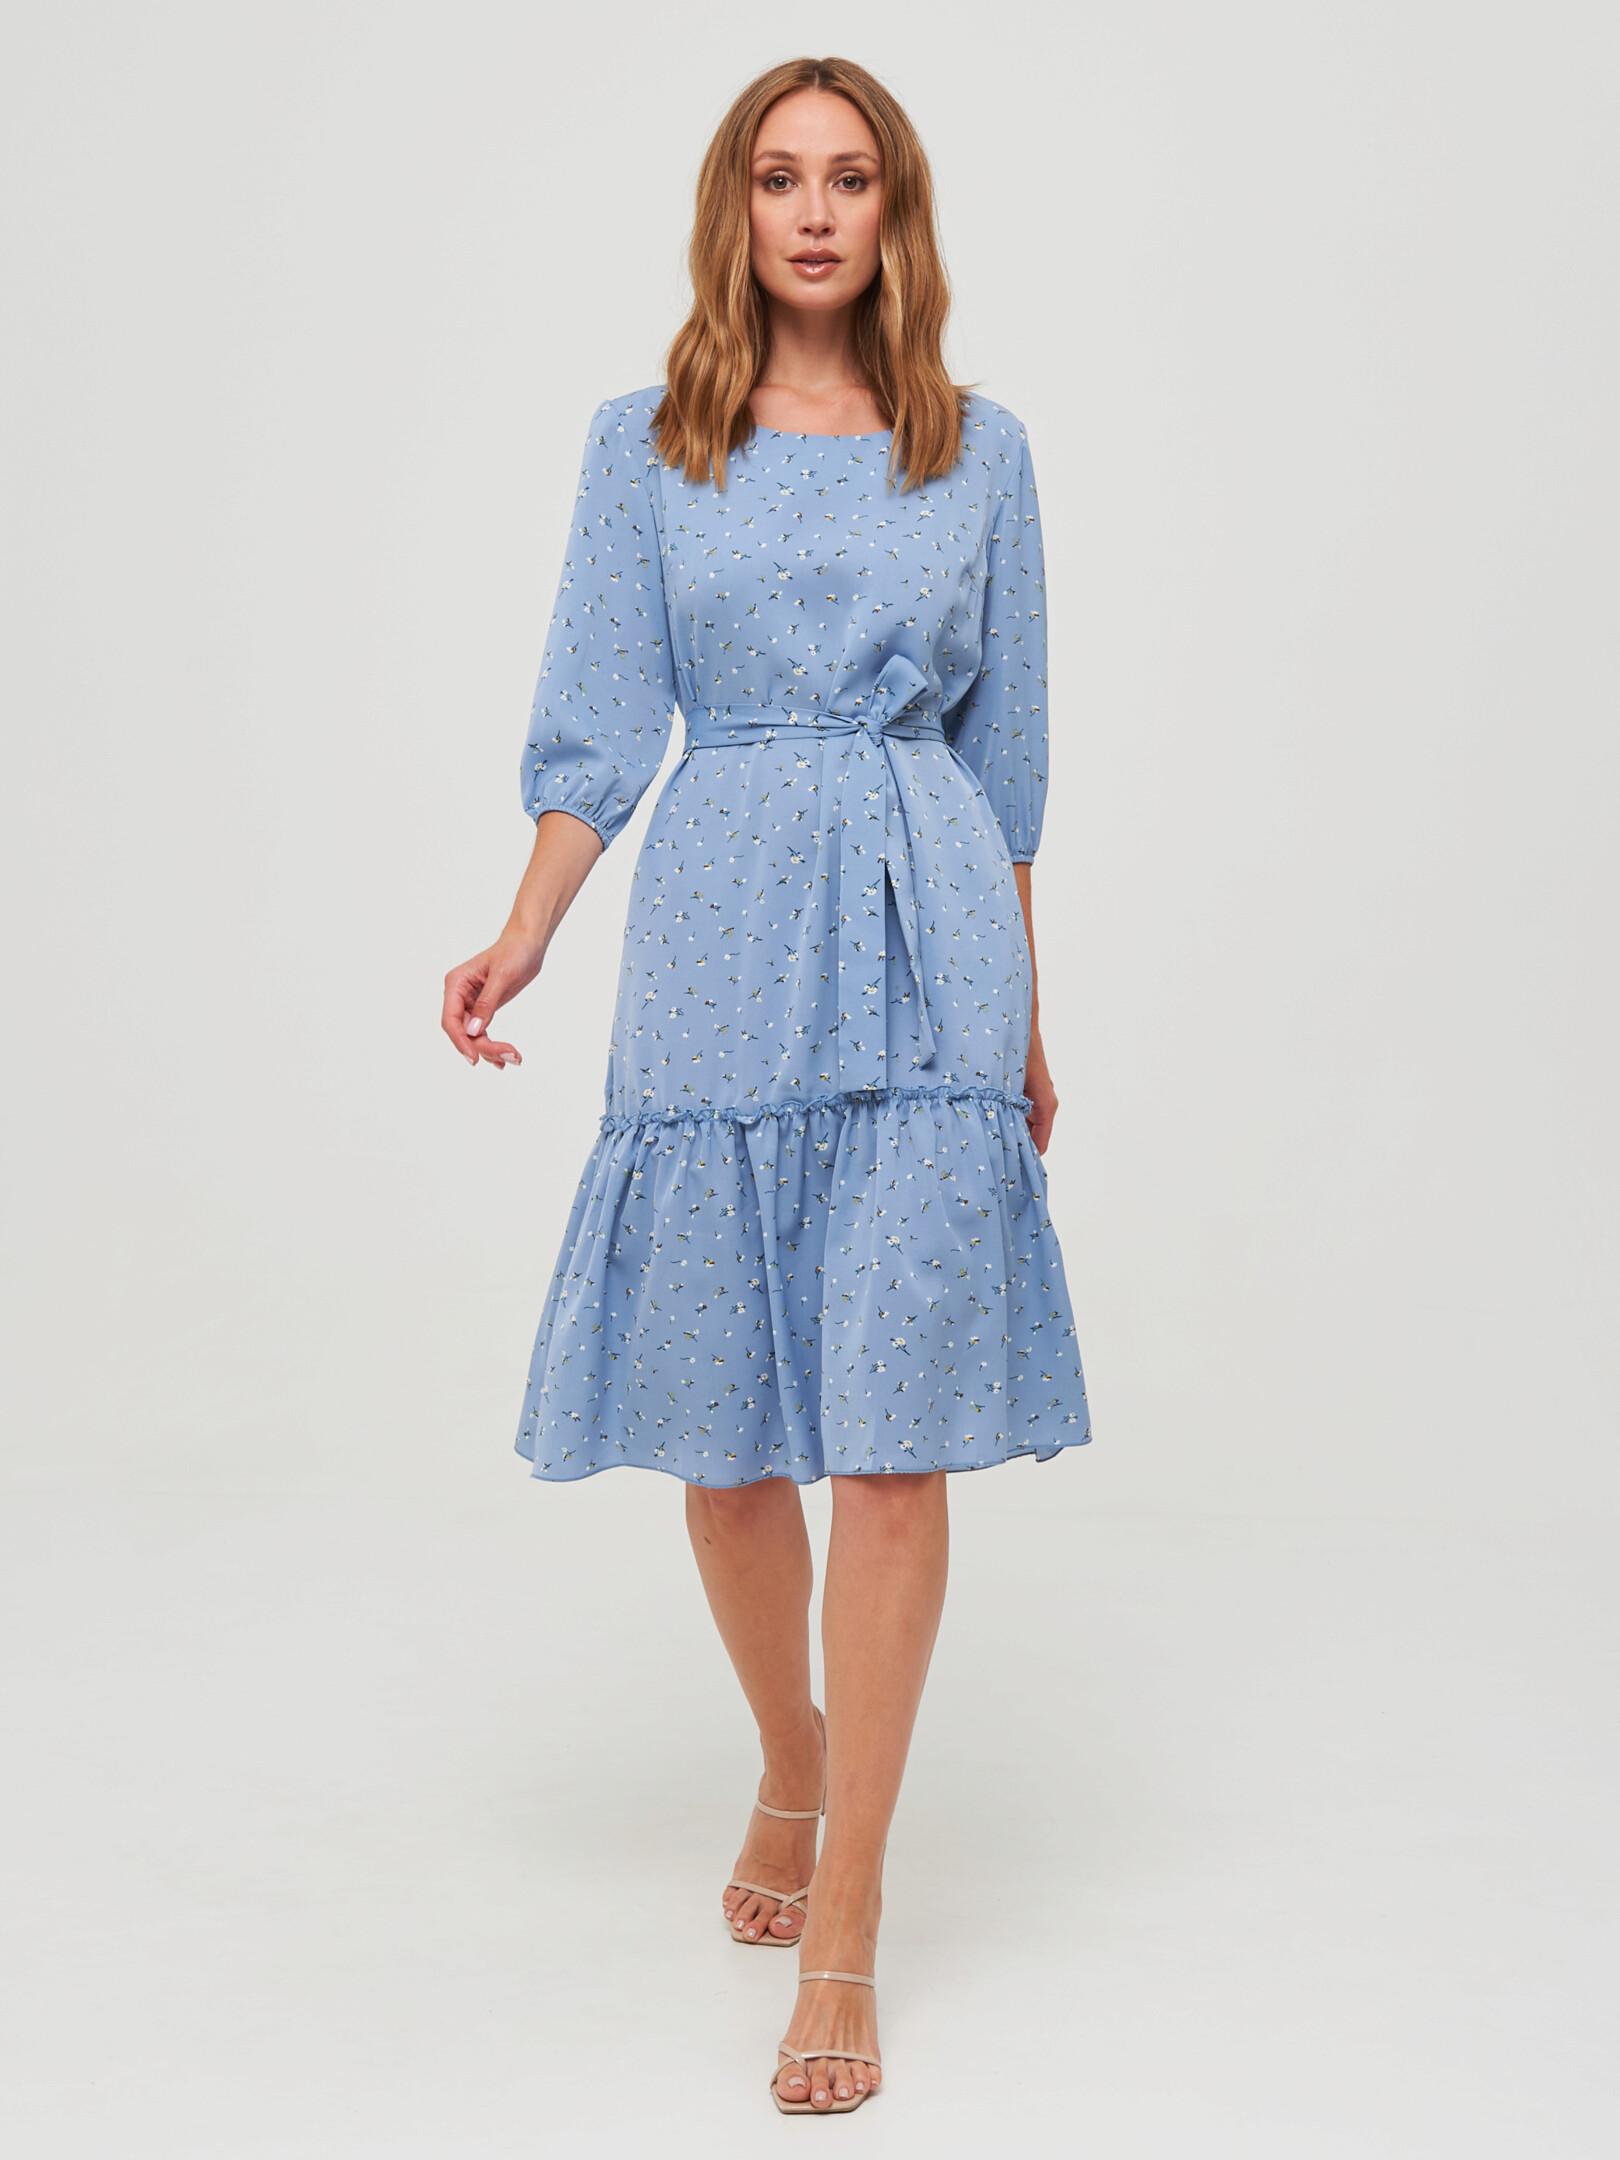 Платье женское TANINI 68645 голубое 52 RU